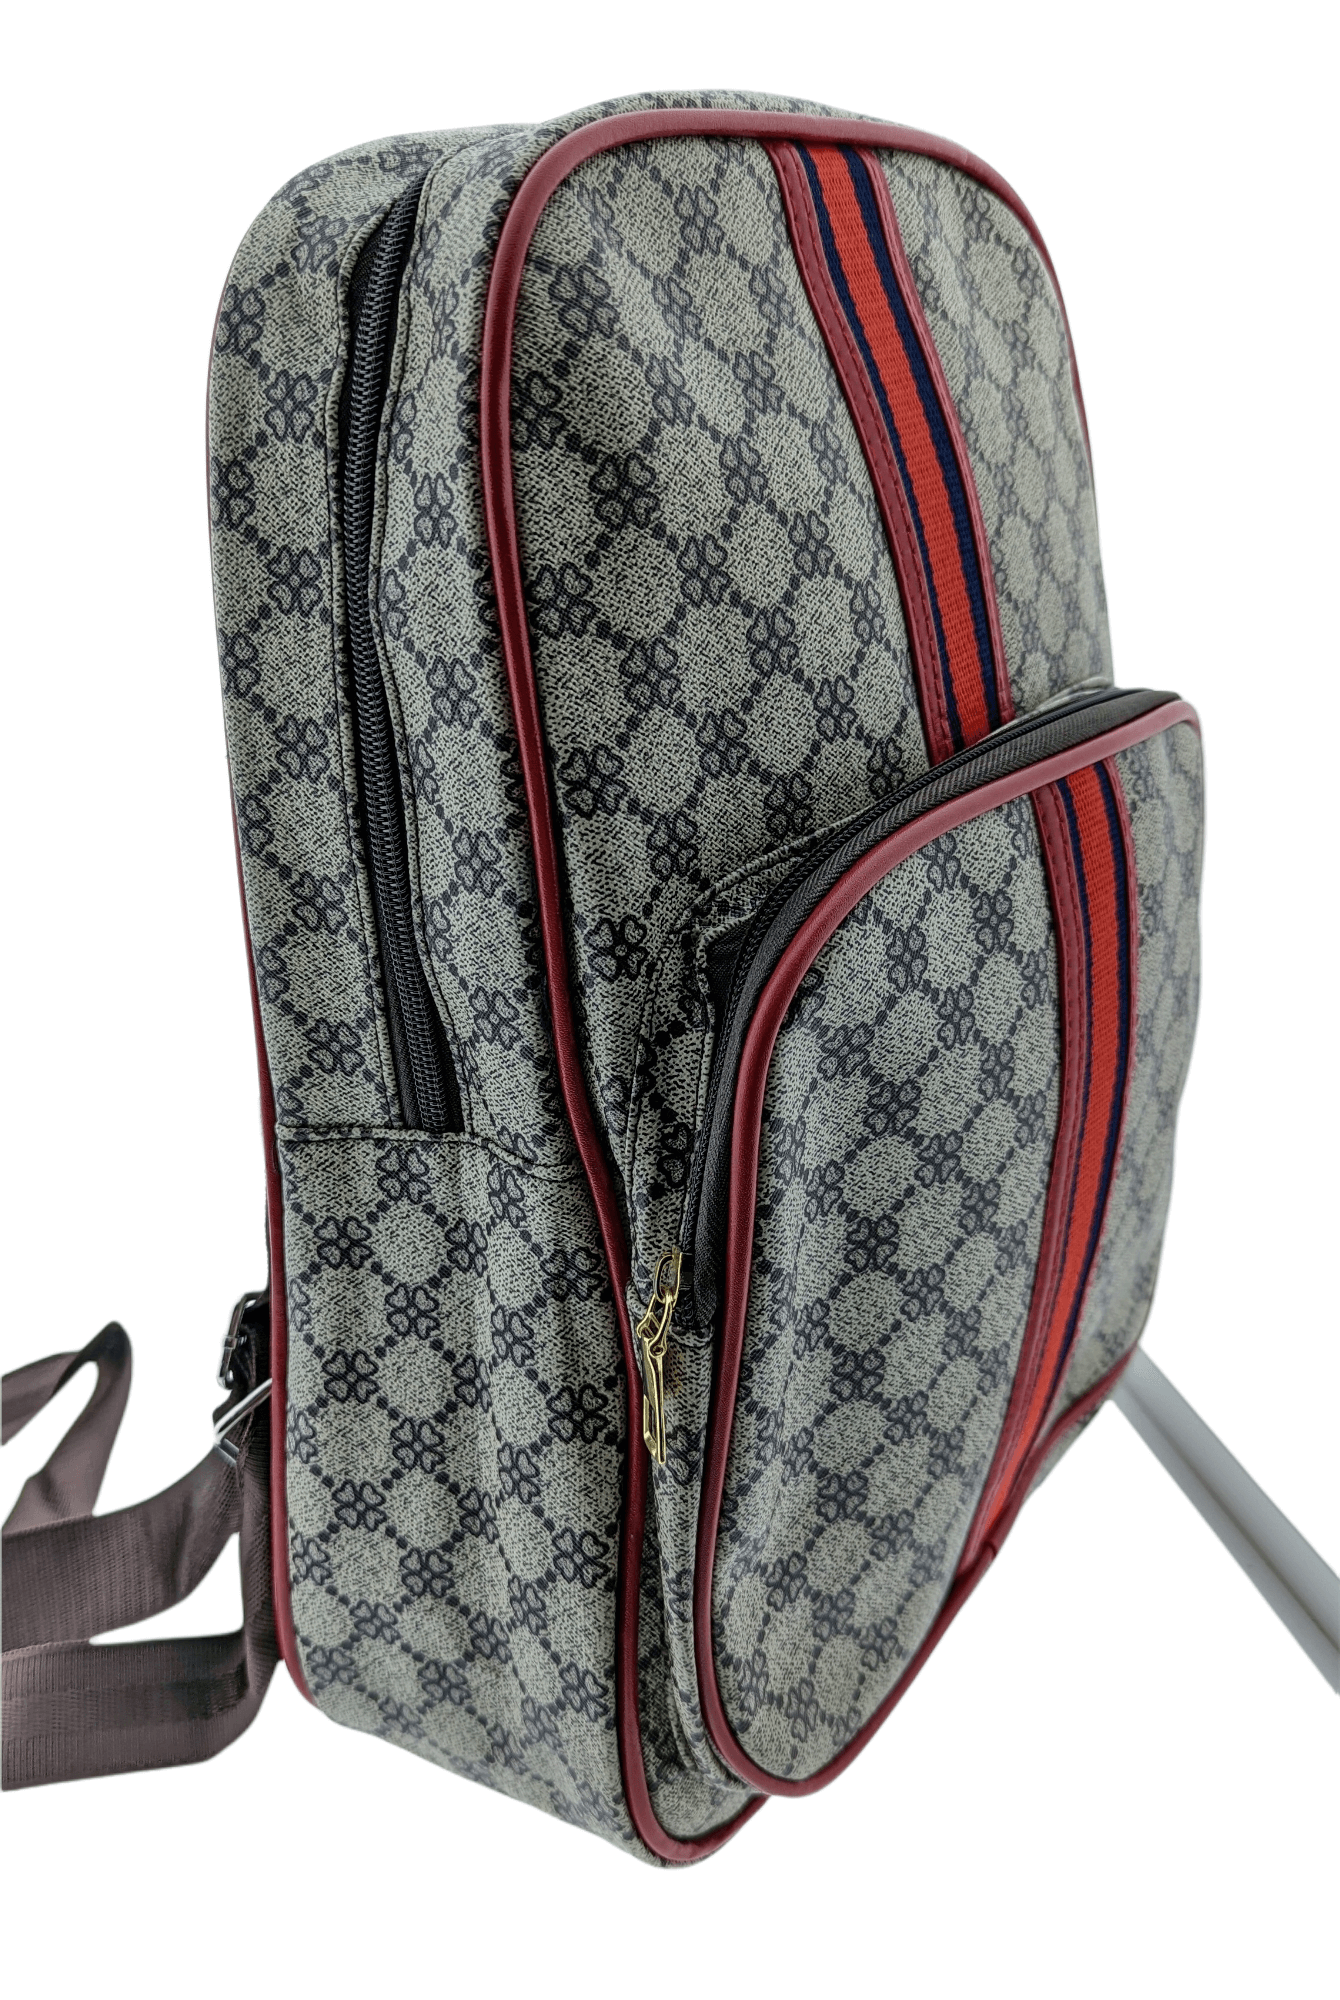 Swolit Backpack G Pattern-